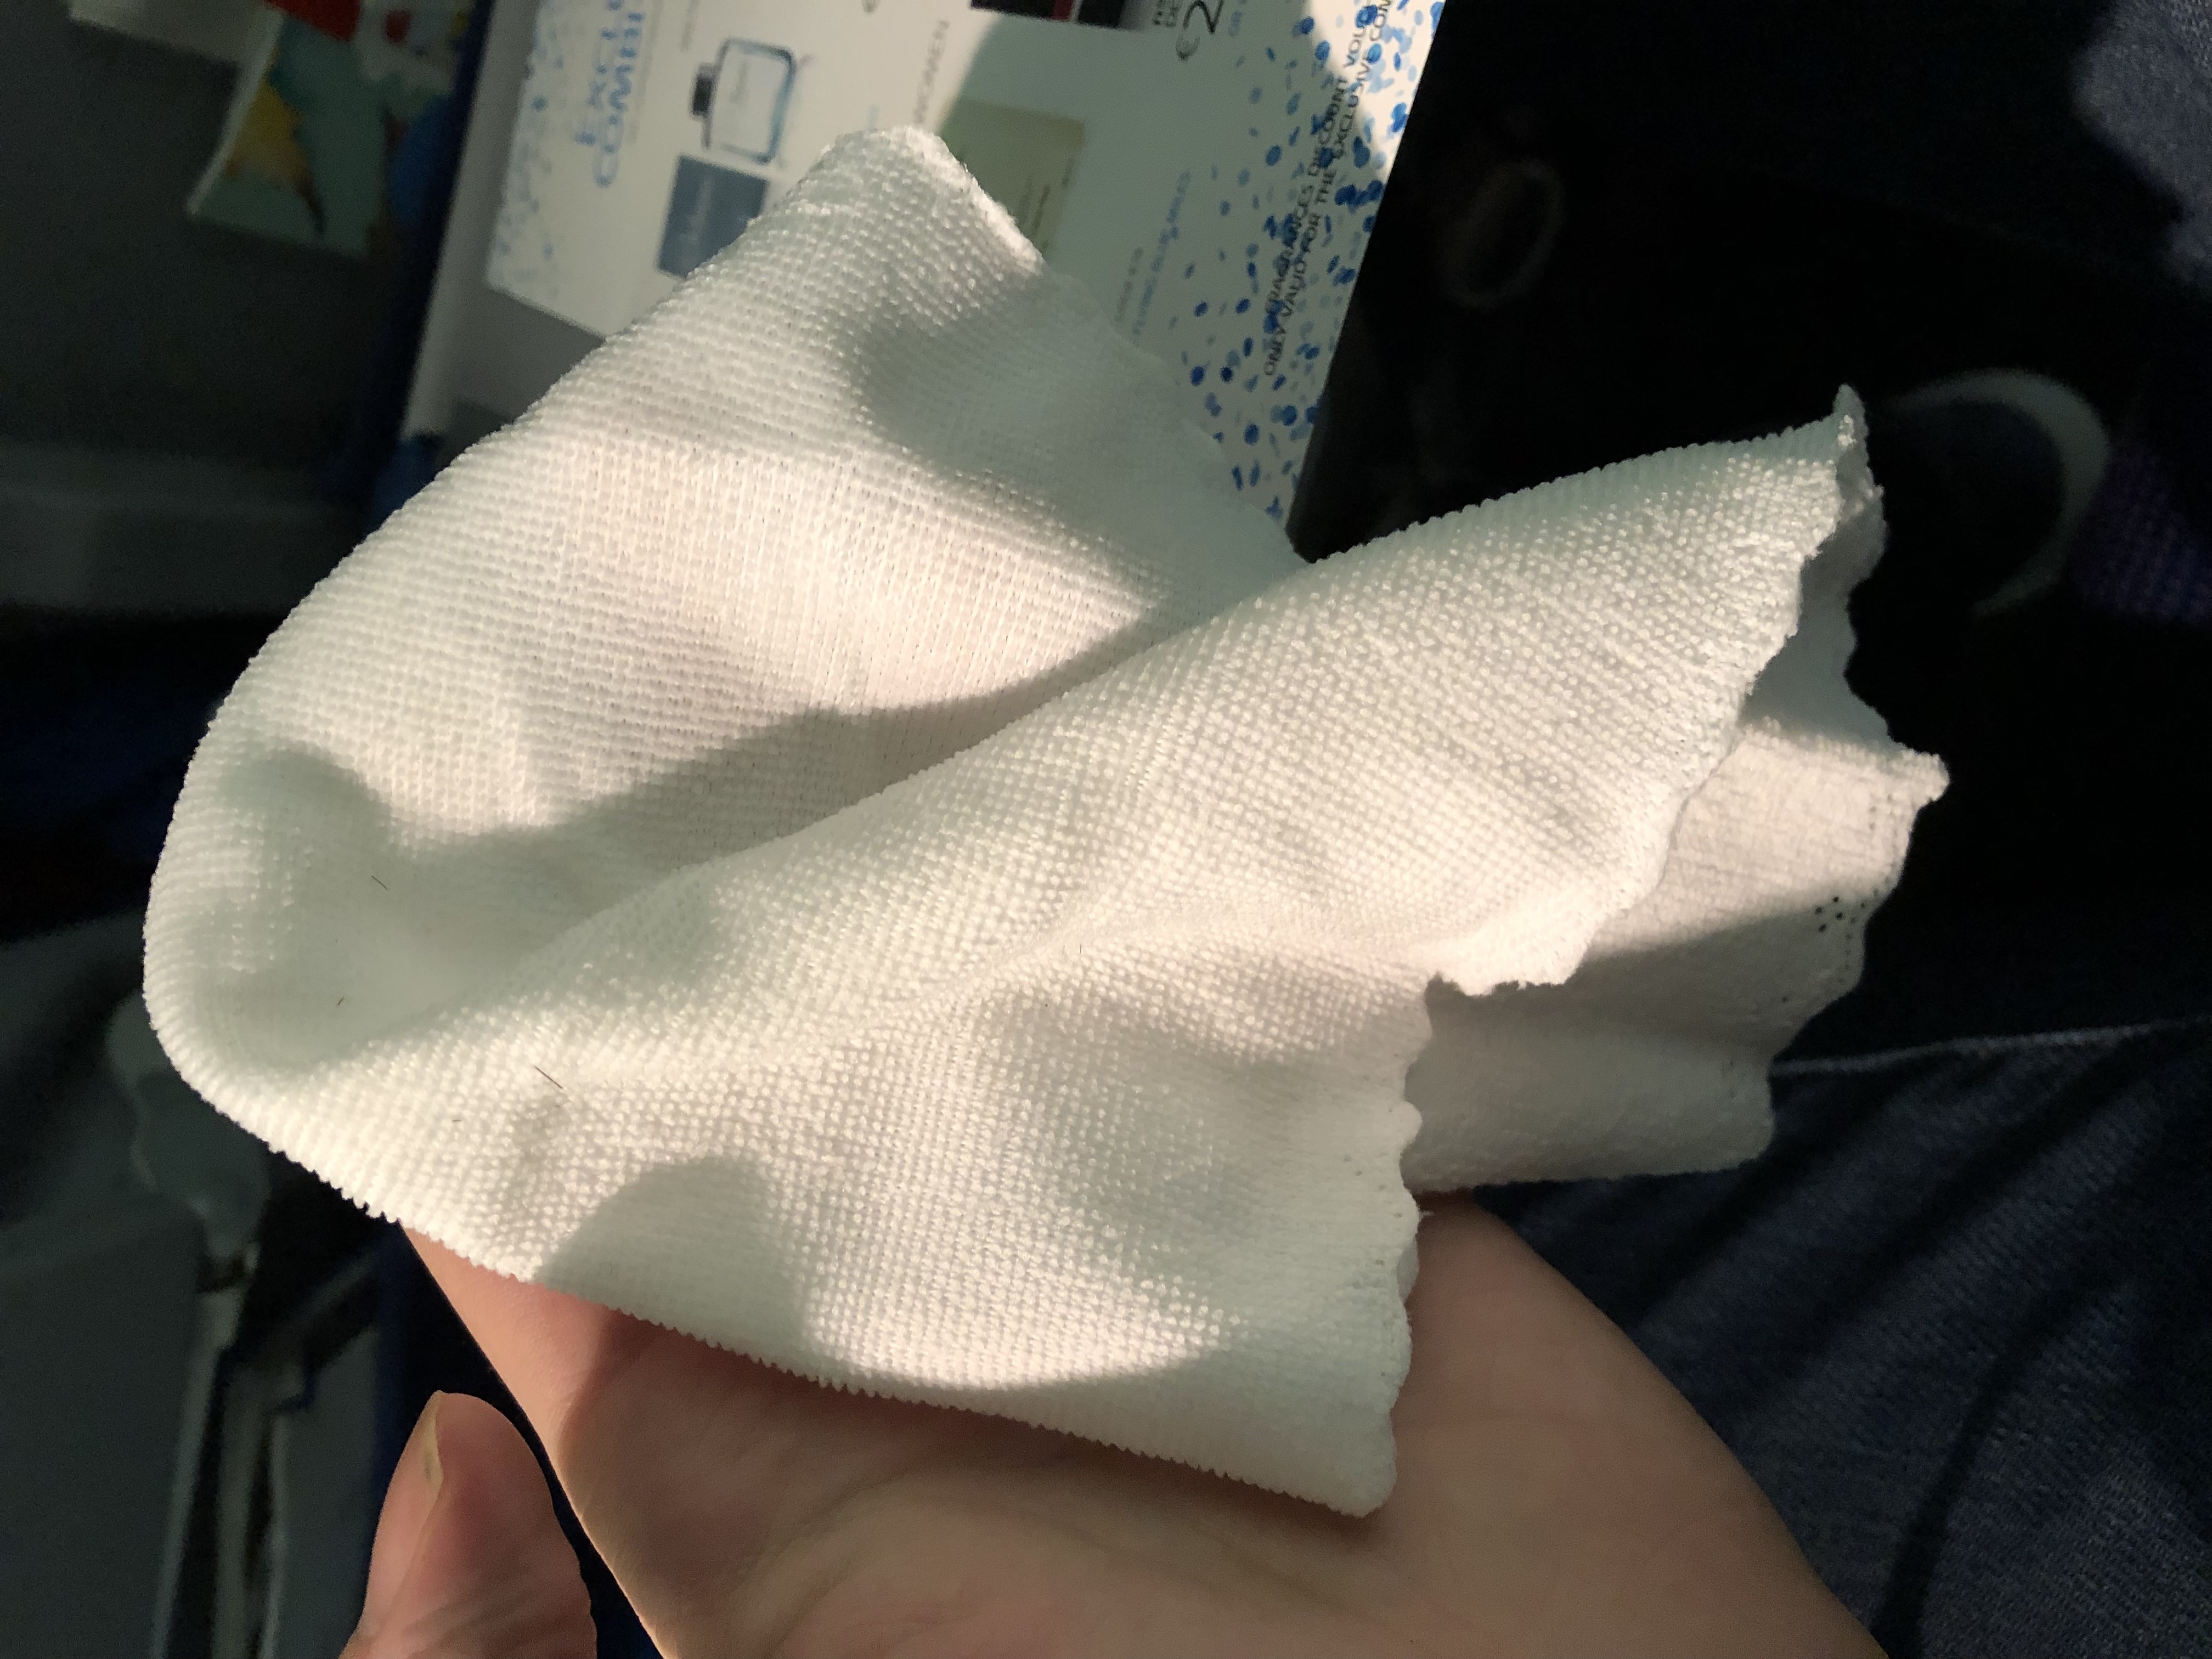 Towel service economy class KLM